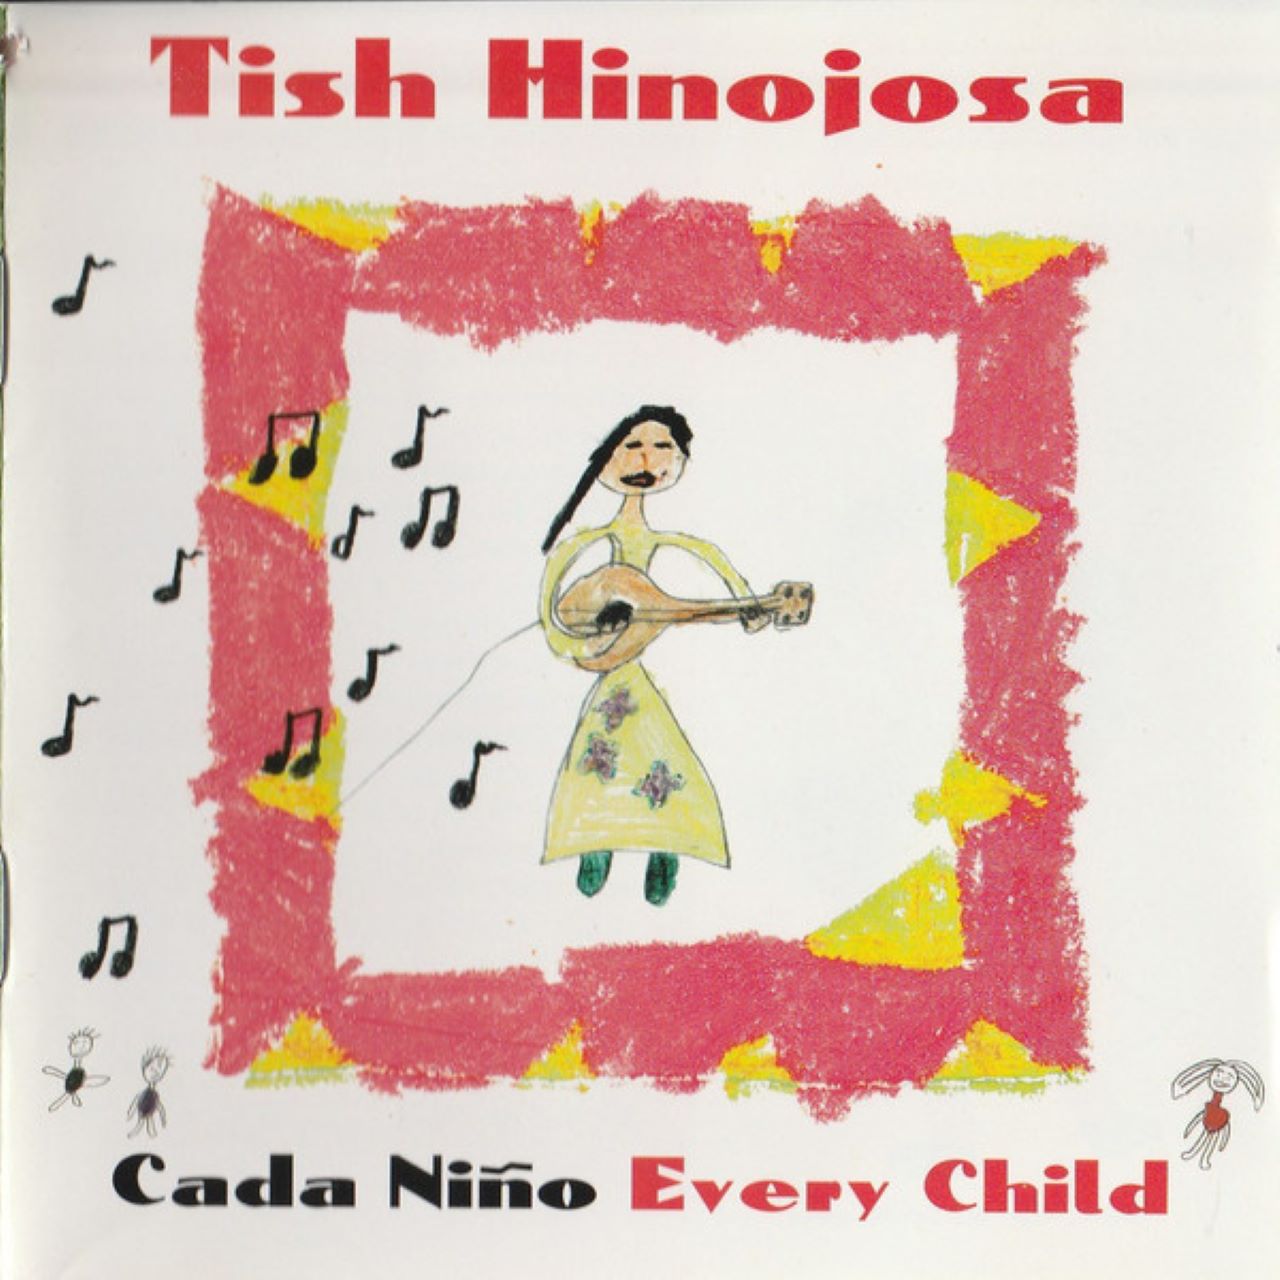 Tish Hinojosa - Cada Niño - Every Child cover album